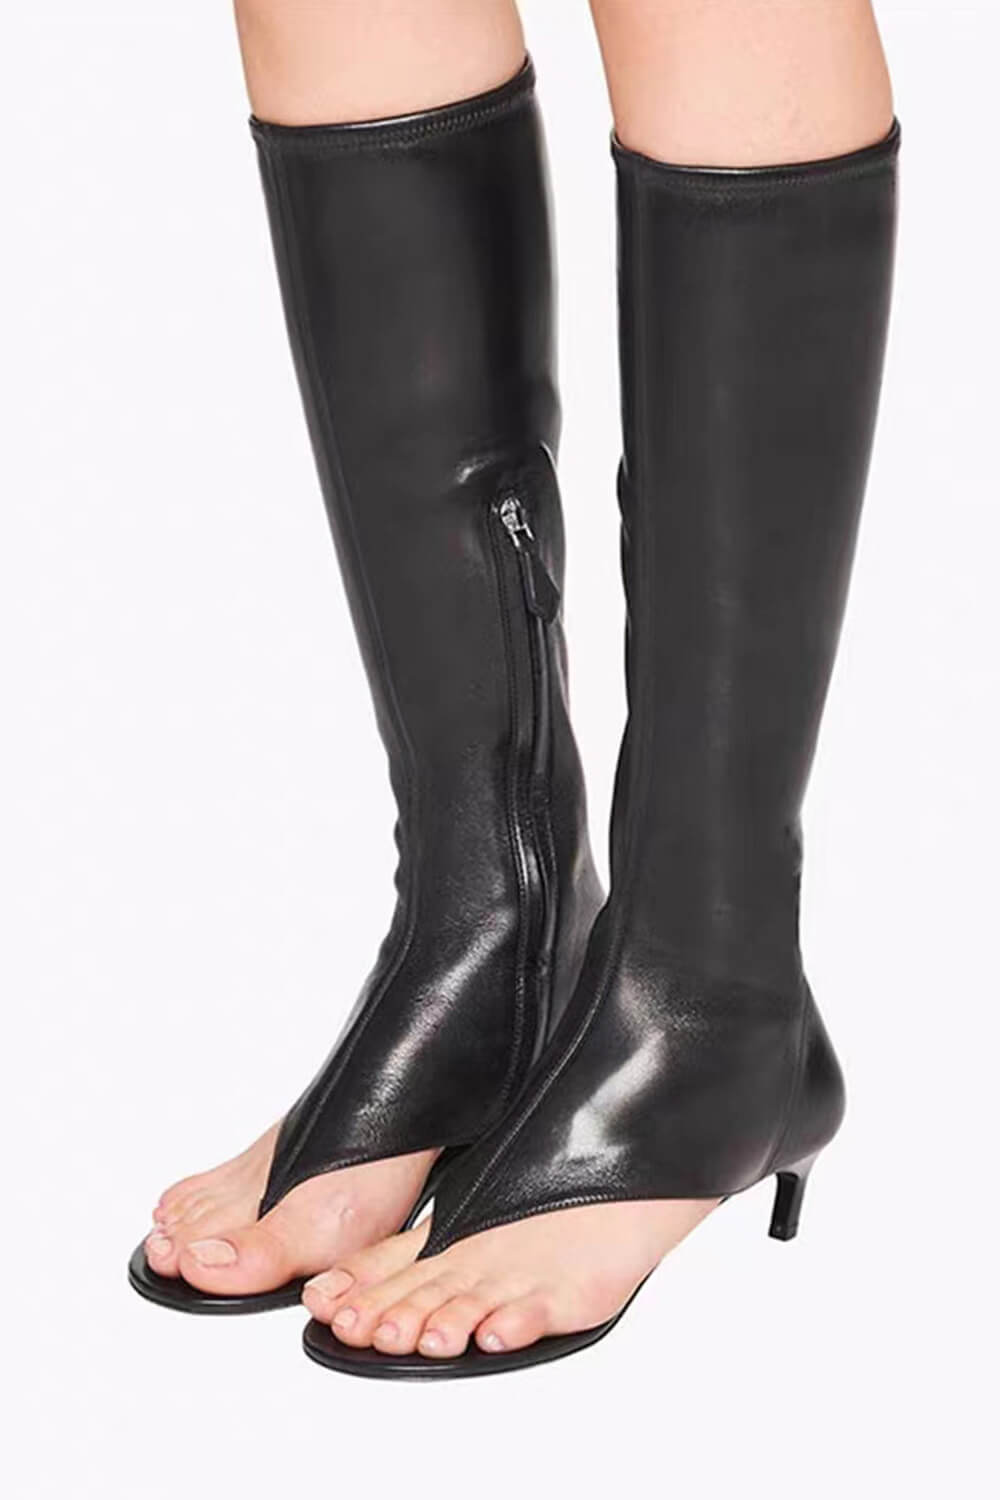 Women's Mesh Dance Shoes Ankle Boots Lace Up Peep Toe High Heels Sandals  Shoes | eBay